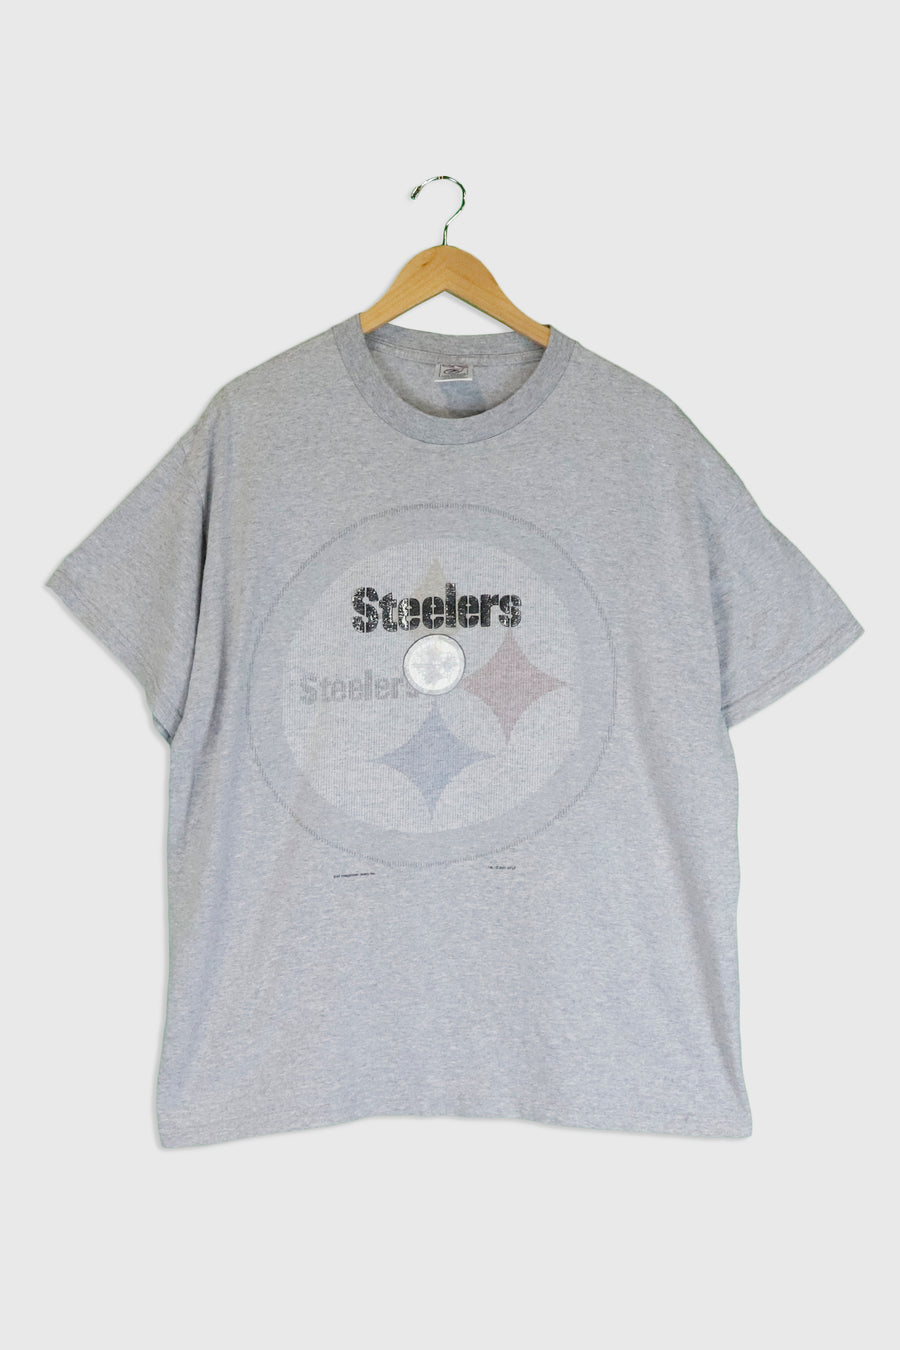 Vintage 2001 NFL Pittsburgh Steelers T Shirt Sz XL